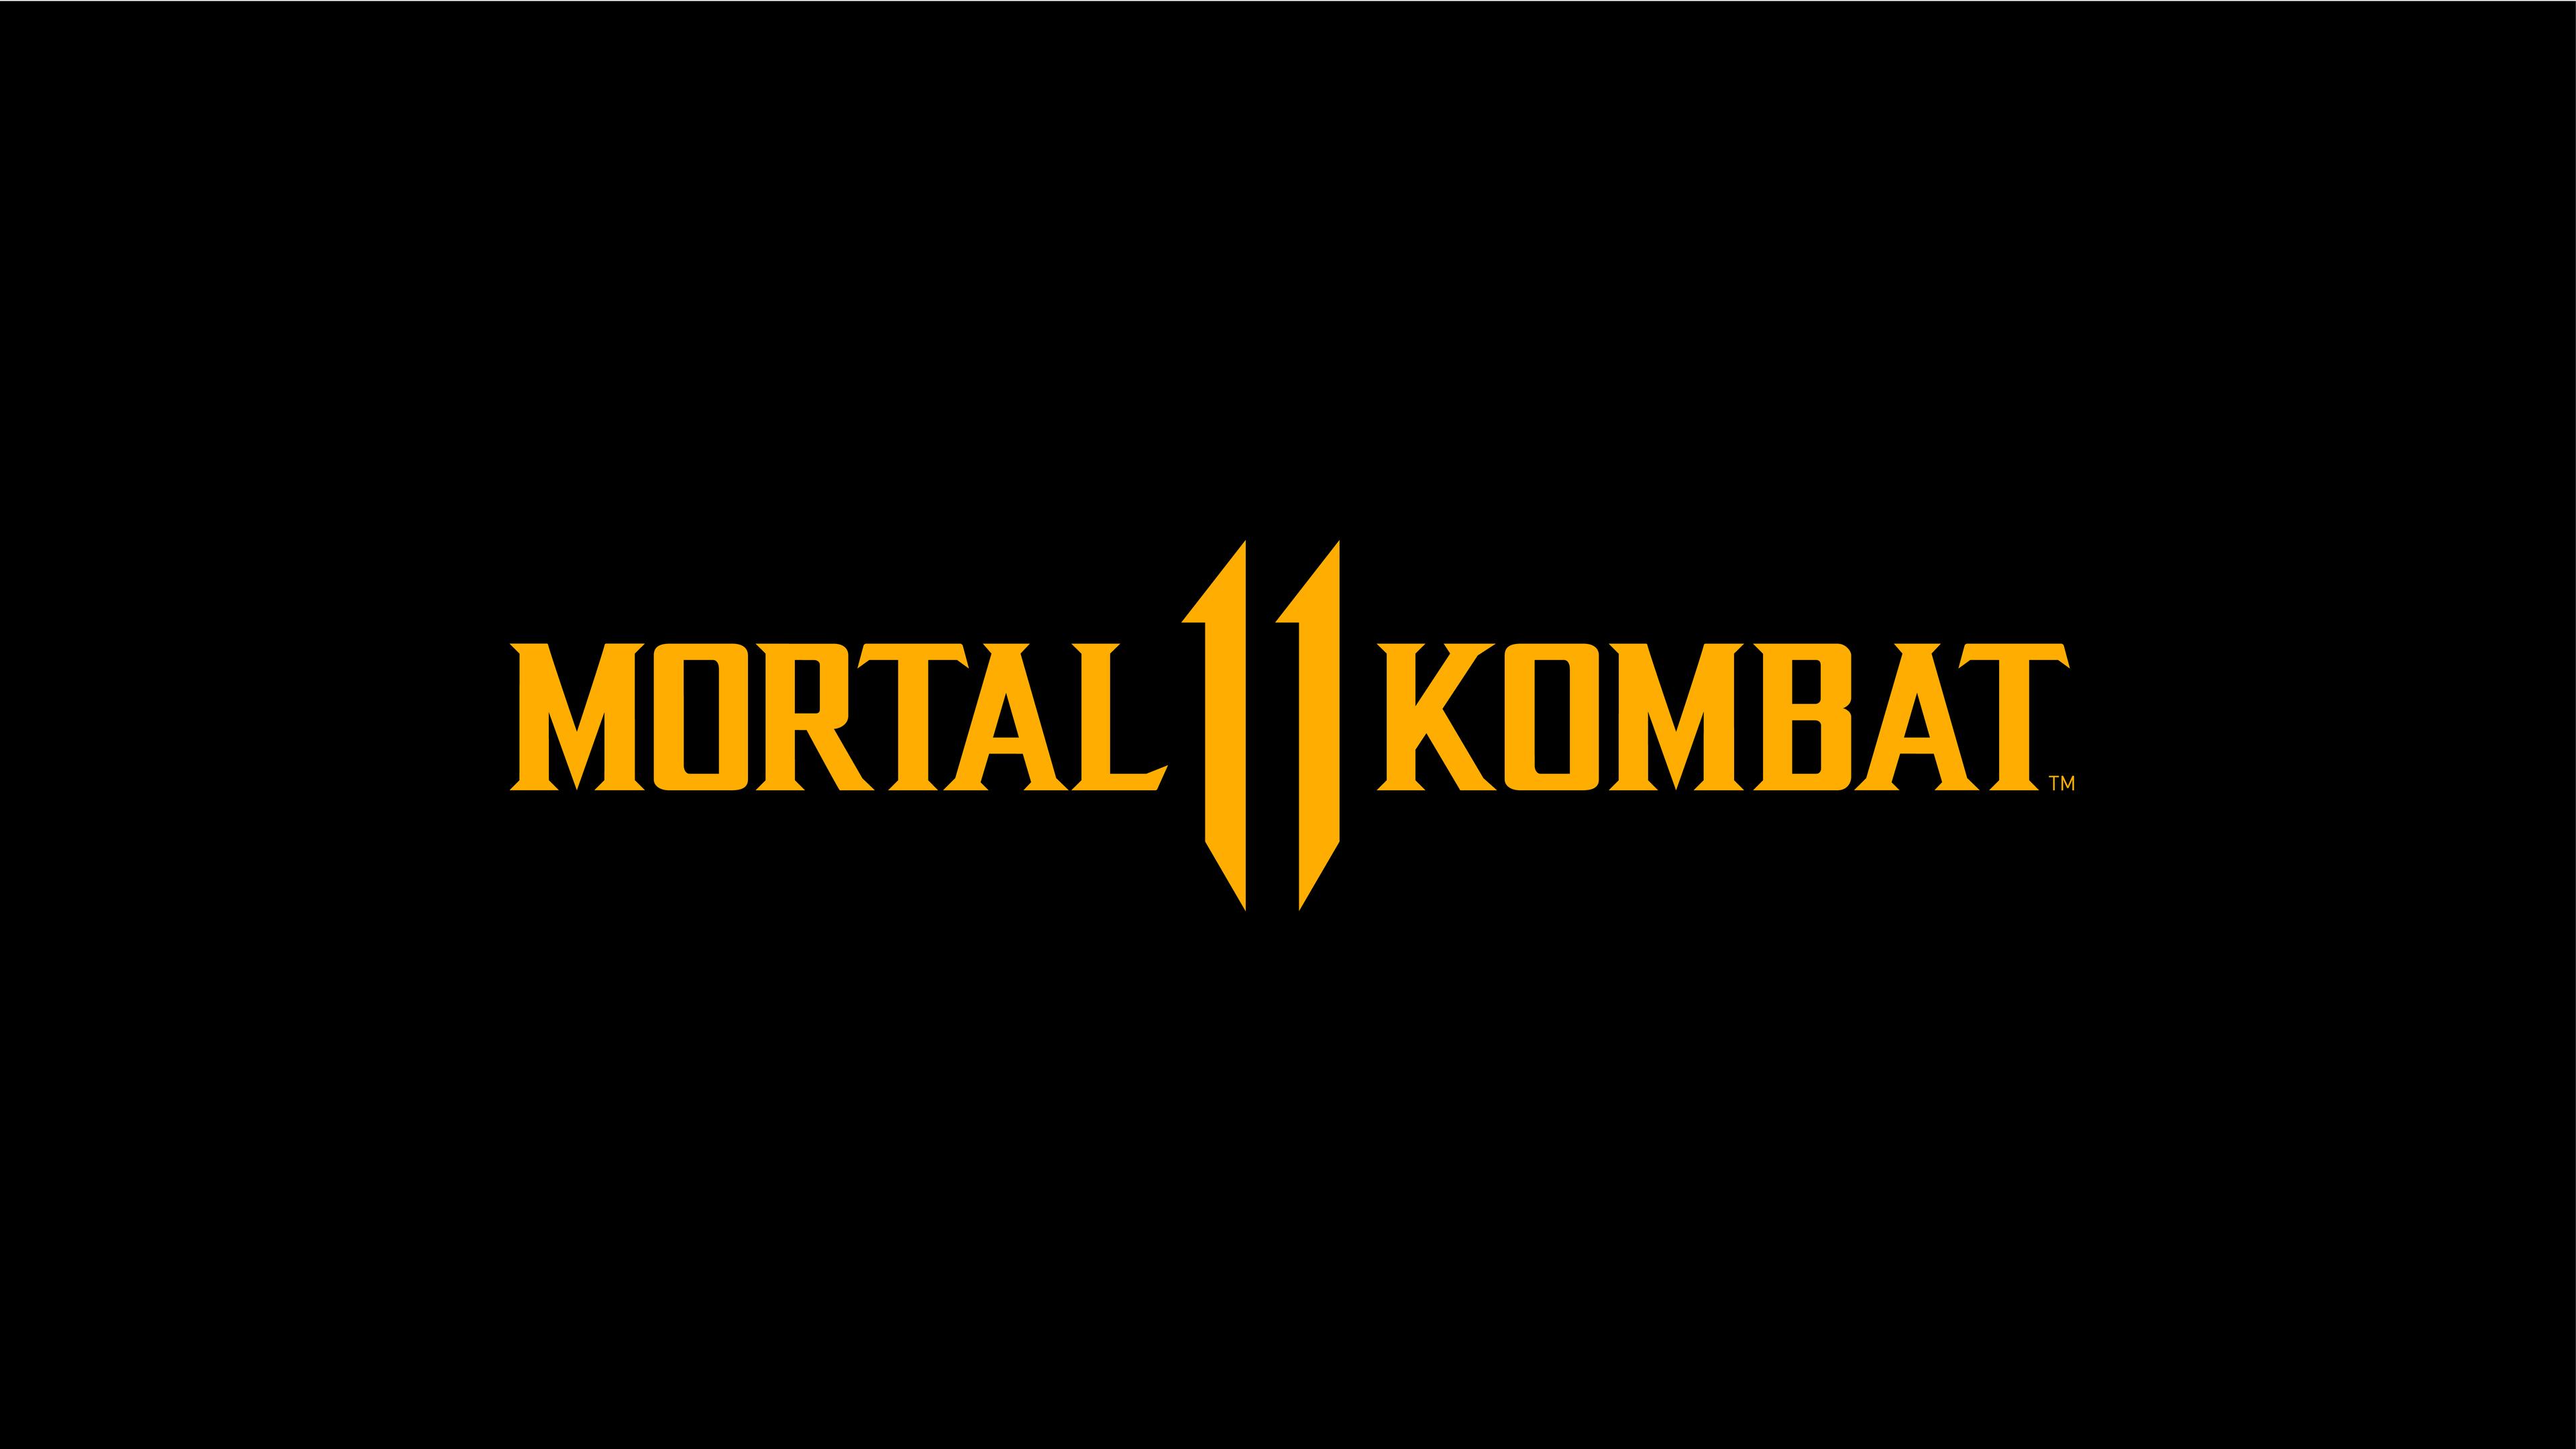 Wallpaper 4k Mortal Kombat 11 Logo Dark Black 4k 2019 games